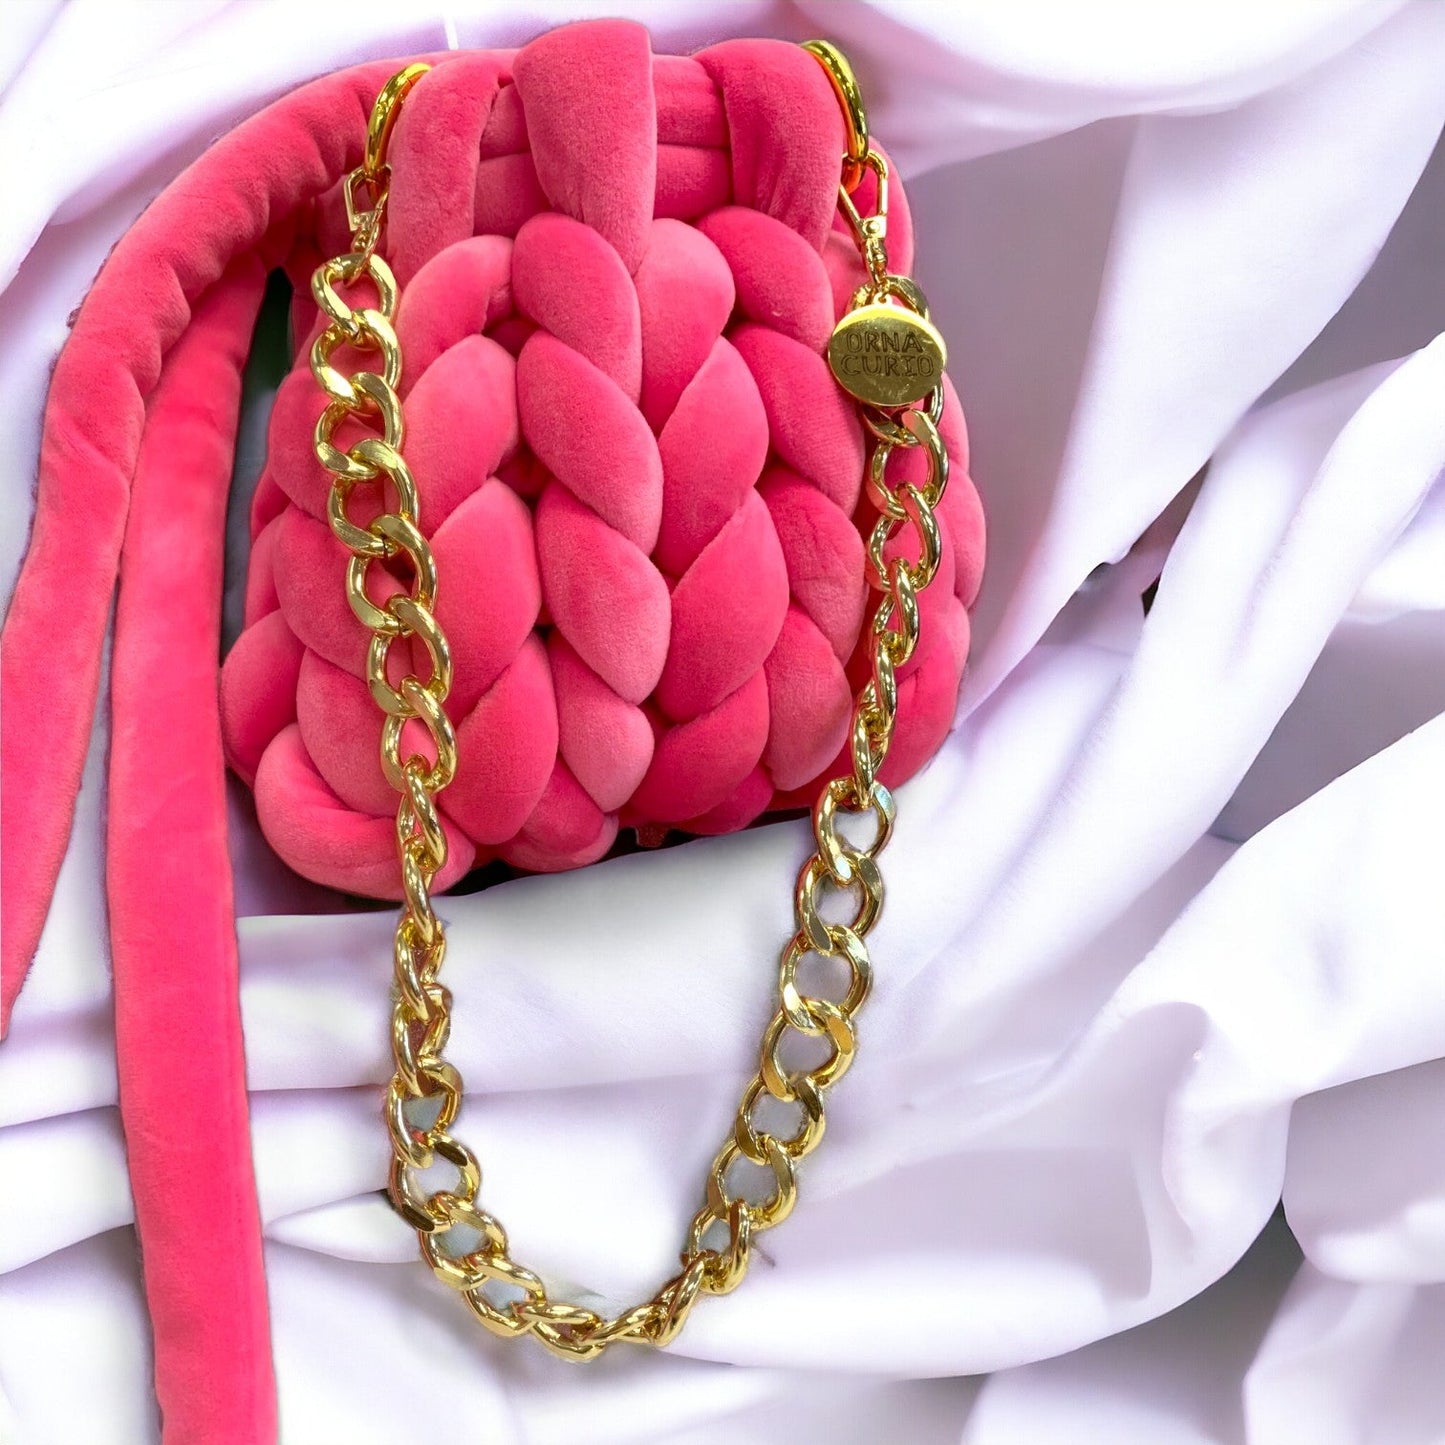 Knitted Cross Body / Shoulder Bag Hot Pink-